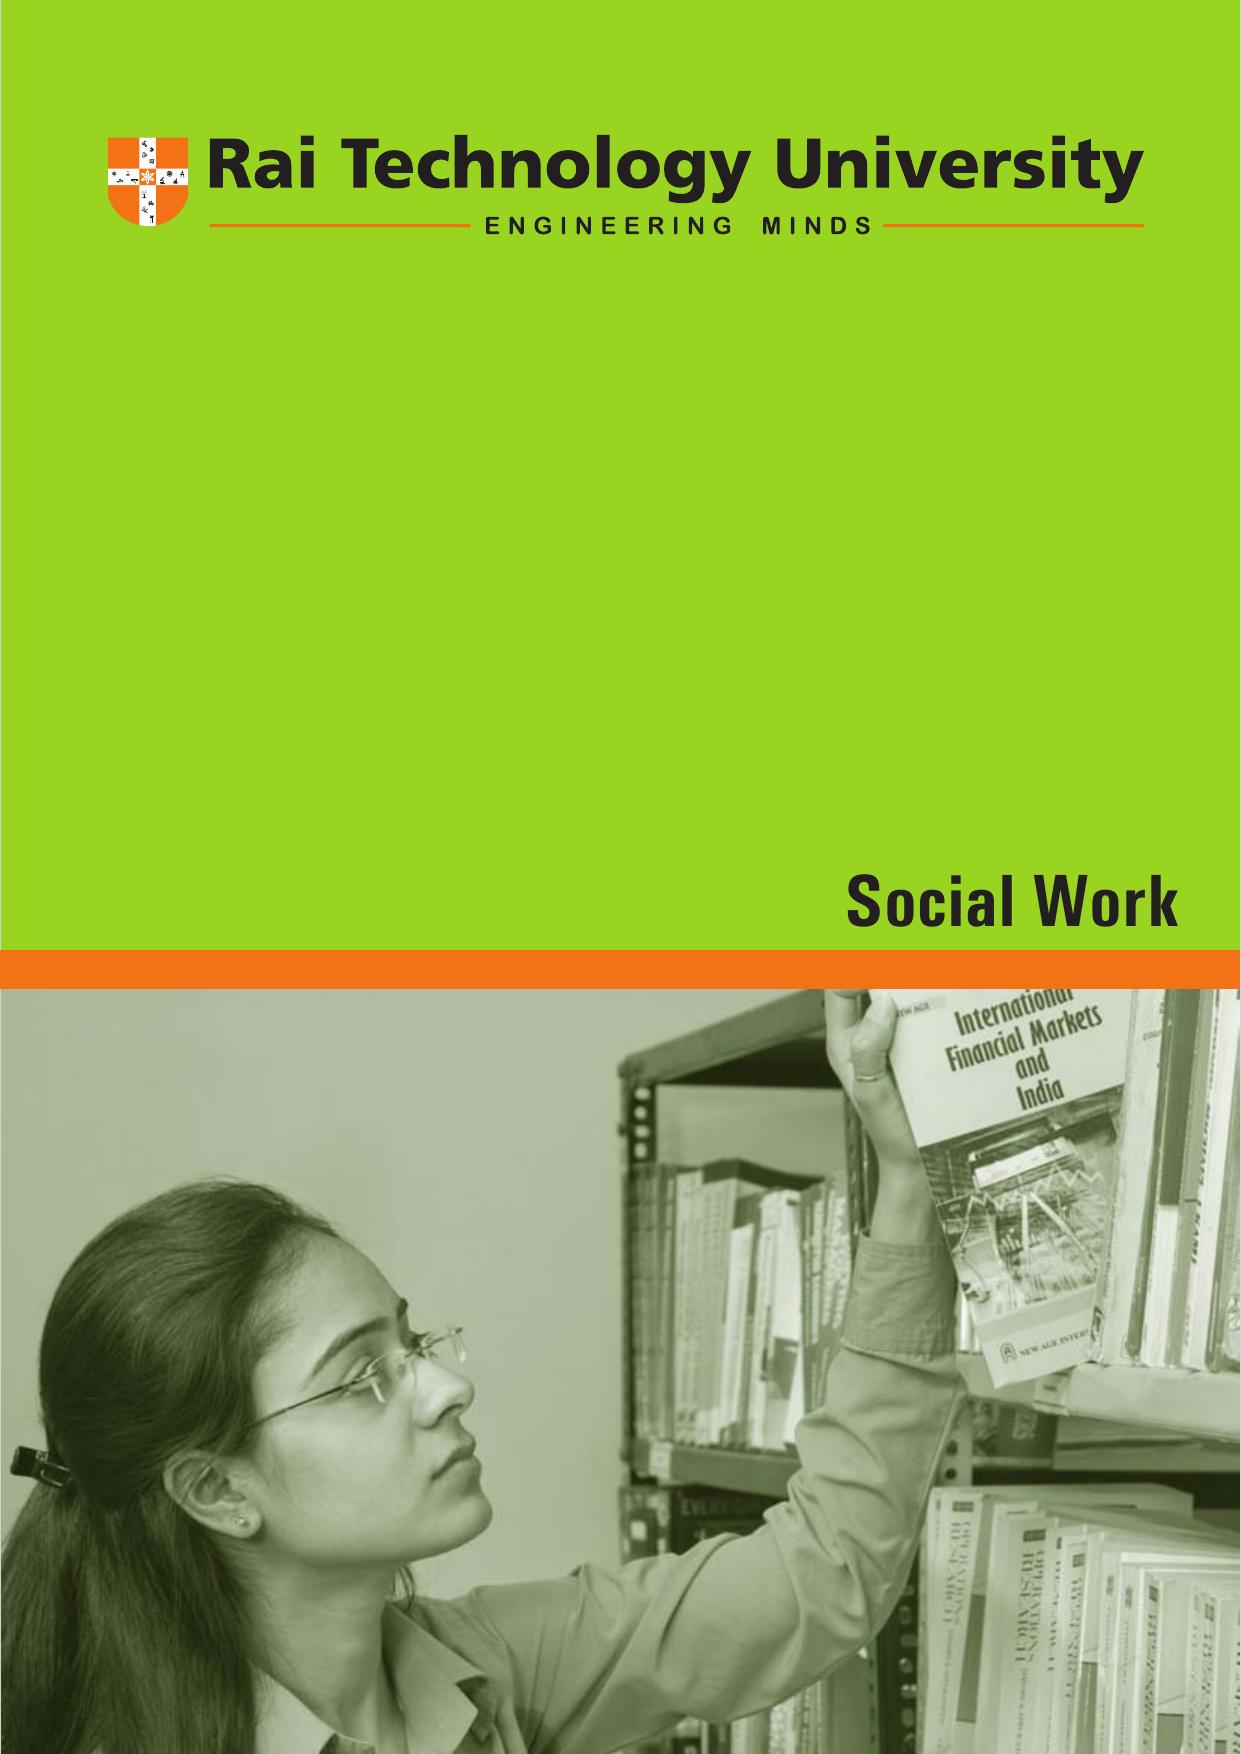 Introduction to Social Work [Rai Foundation]